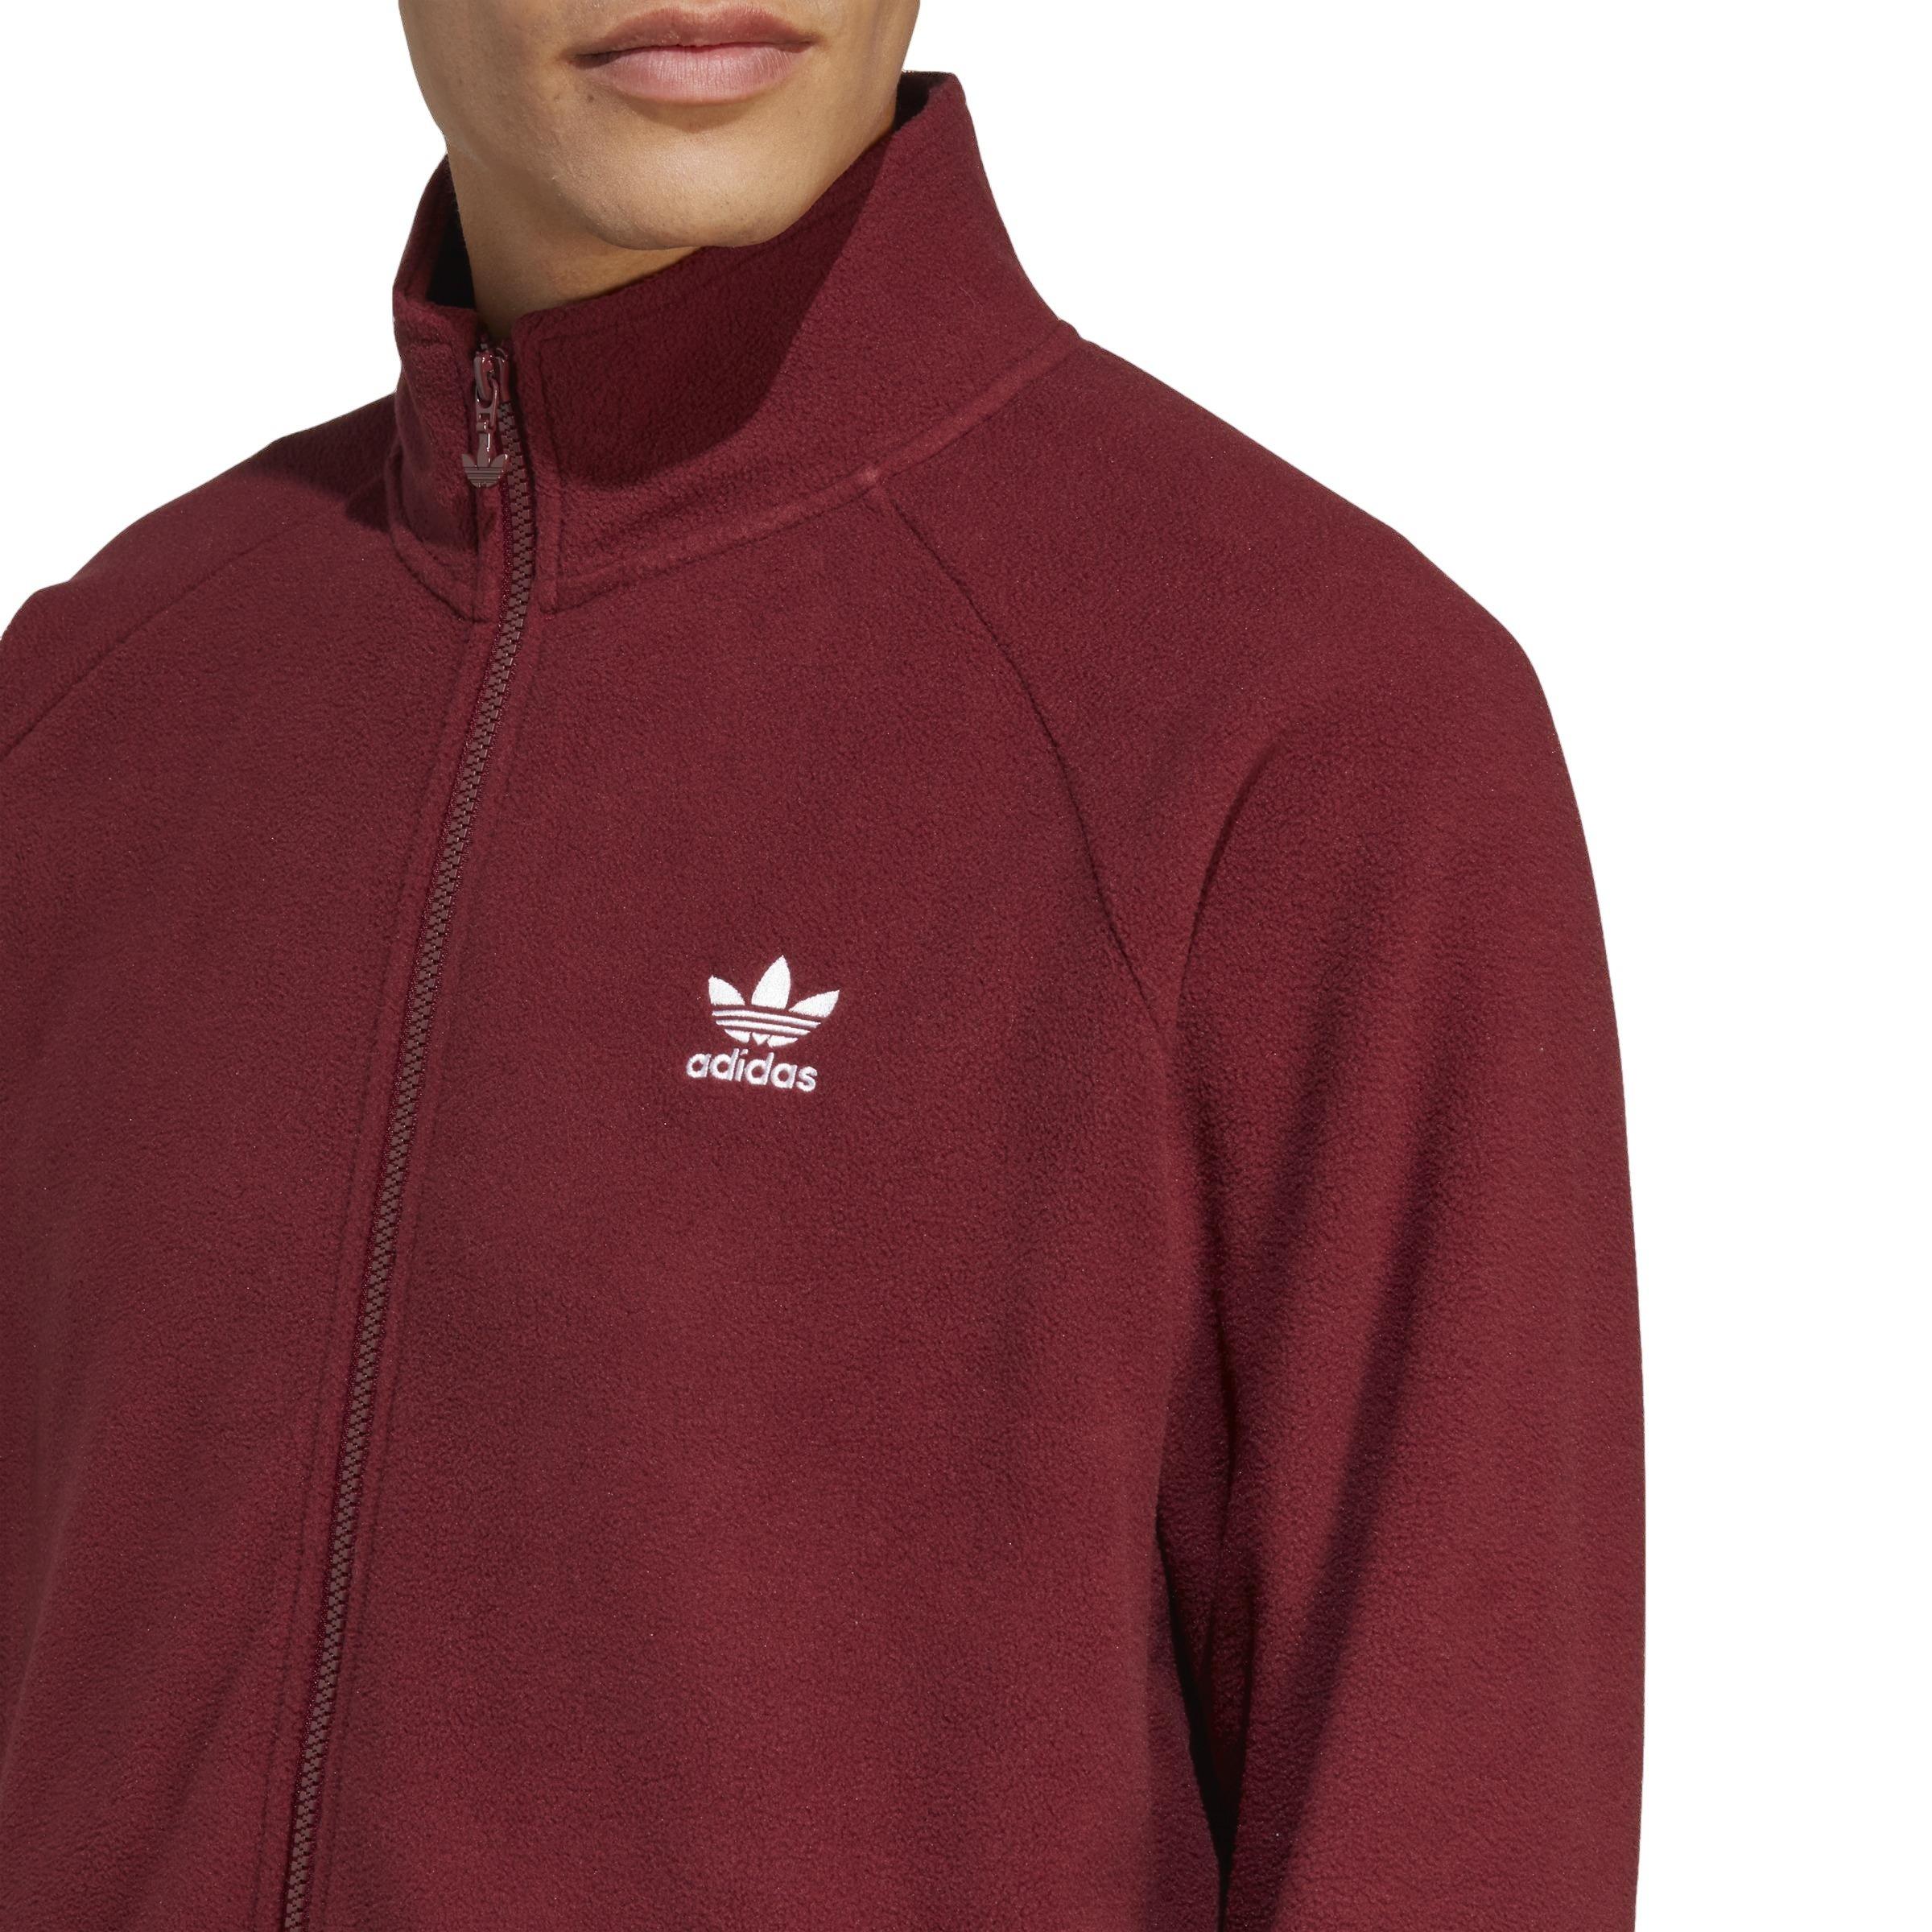 Adidas Originals Men's Adicolor Classics Trefoil Teddy Fleece Jacket